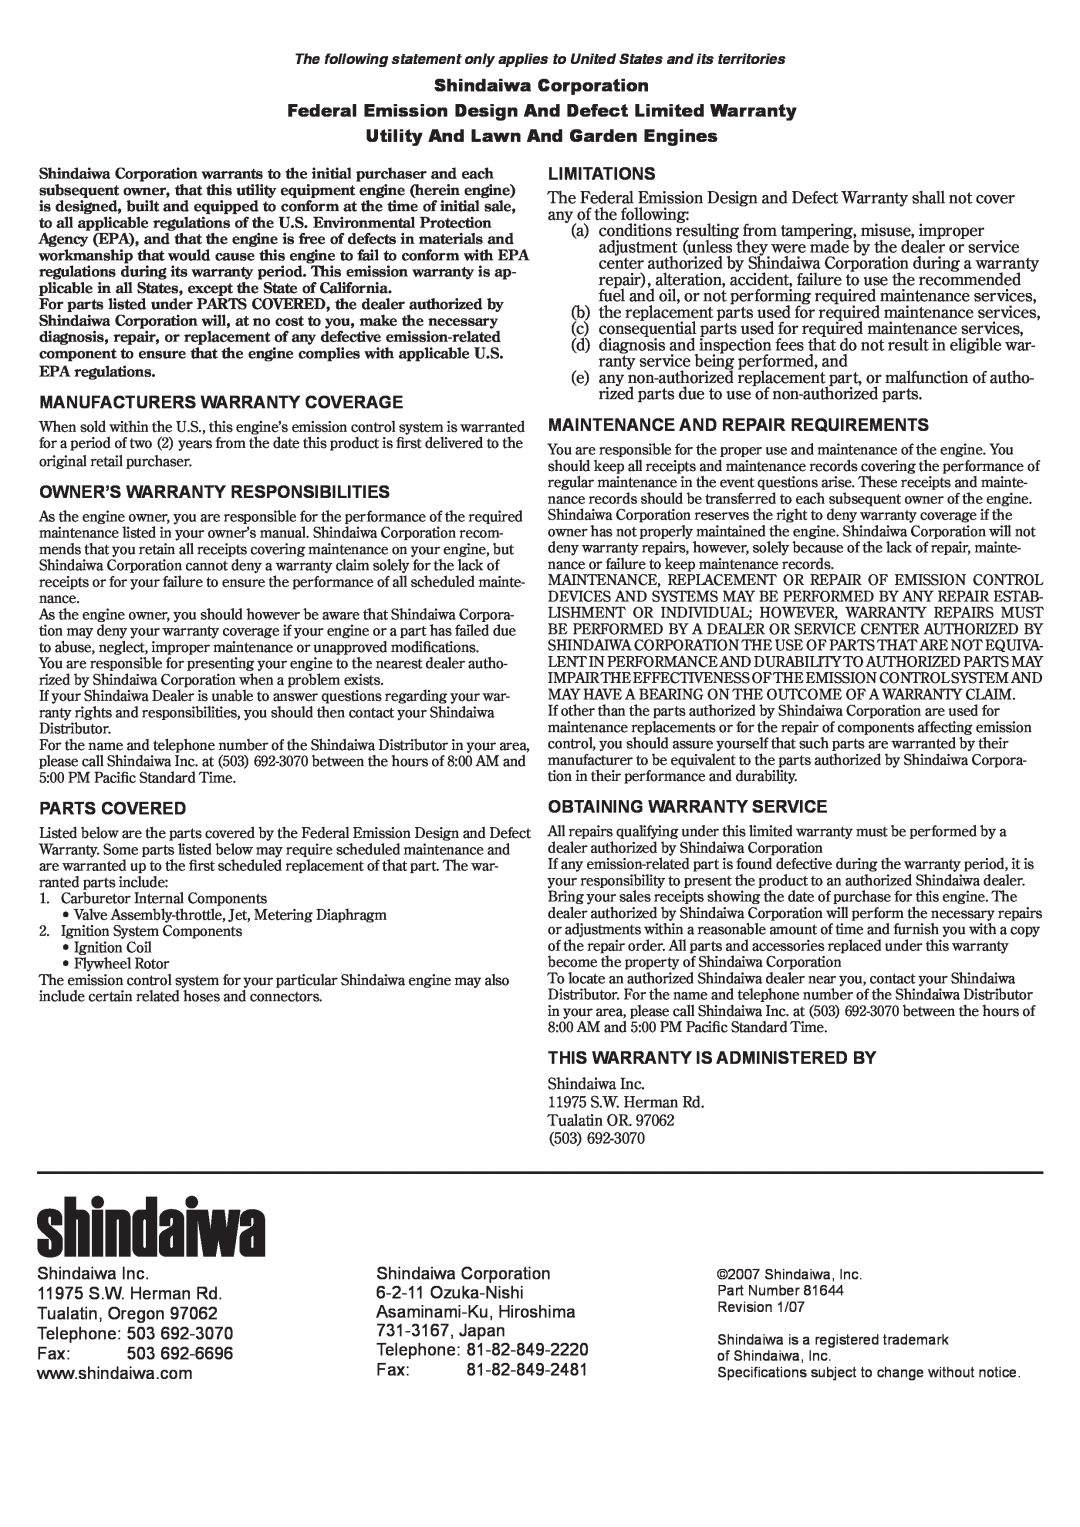 Shindaiwa 81644 Shindaiwa Corporation, Federal Emission Design And Defect Limited Warranty, Limitations, Parts Covered 